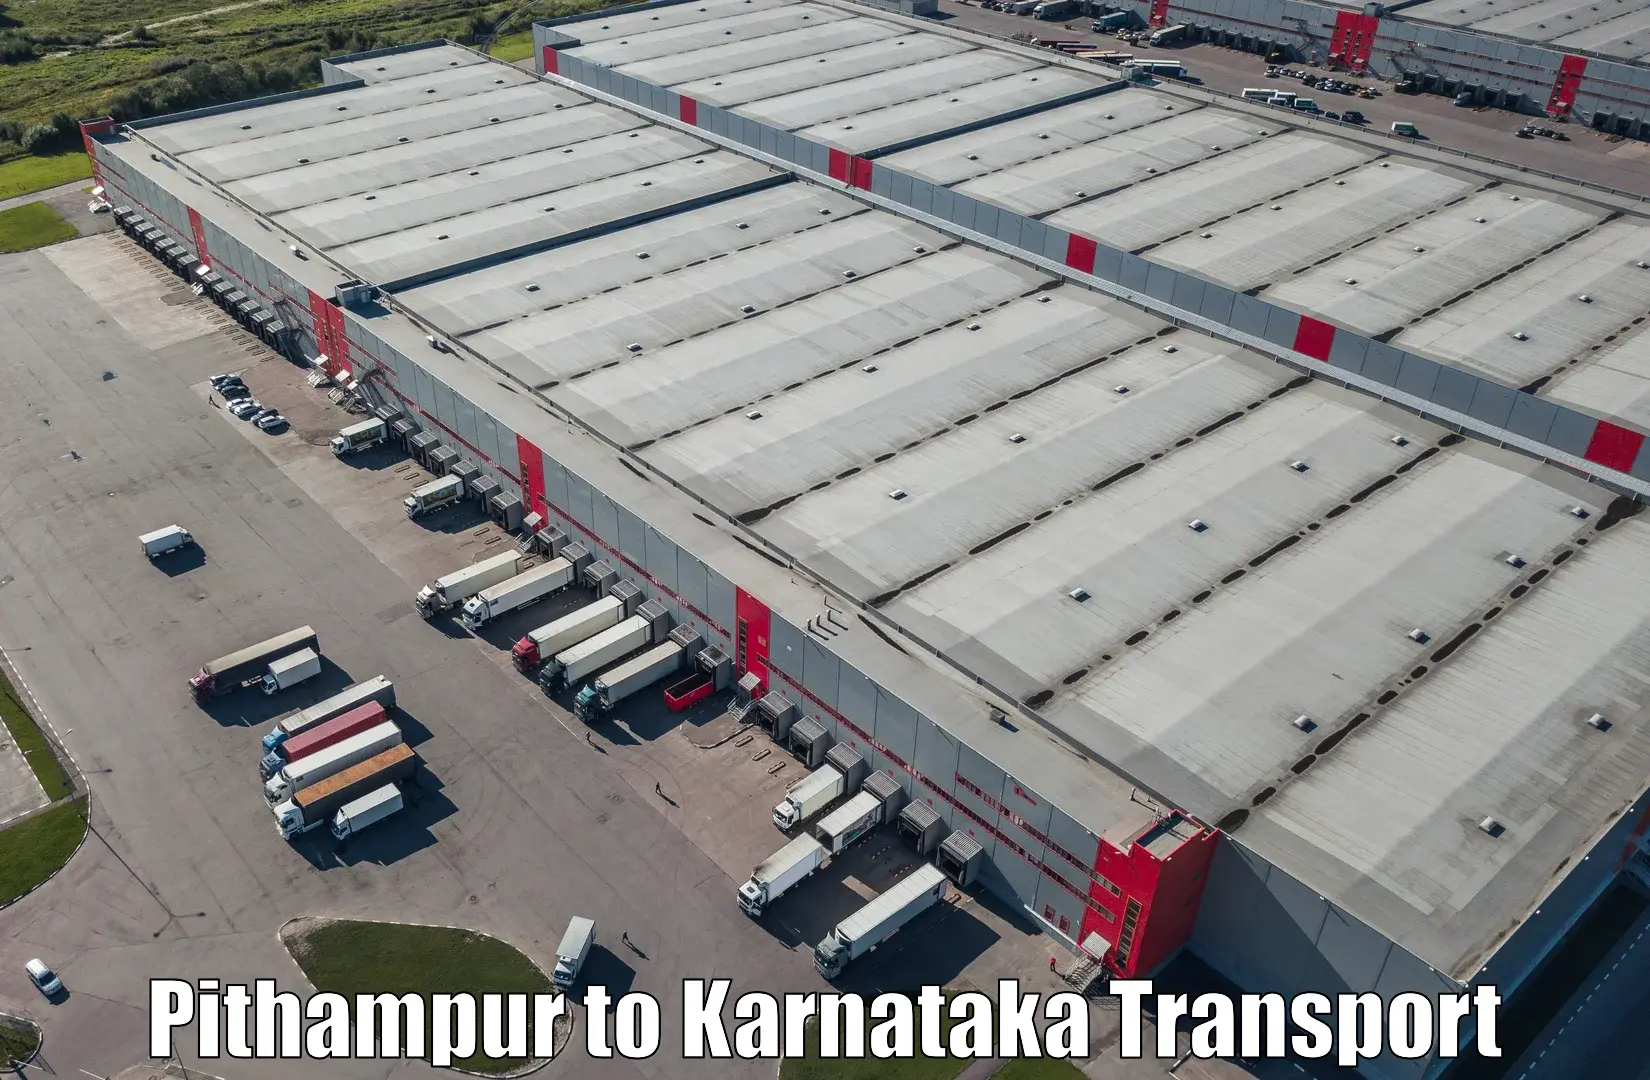 Furniture transport service in Pithampur to Mudigere